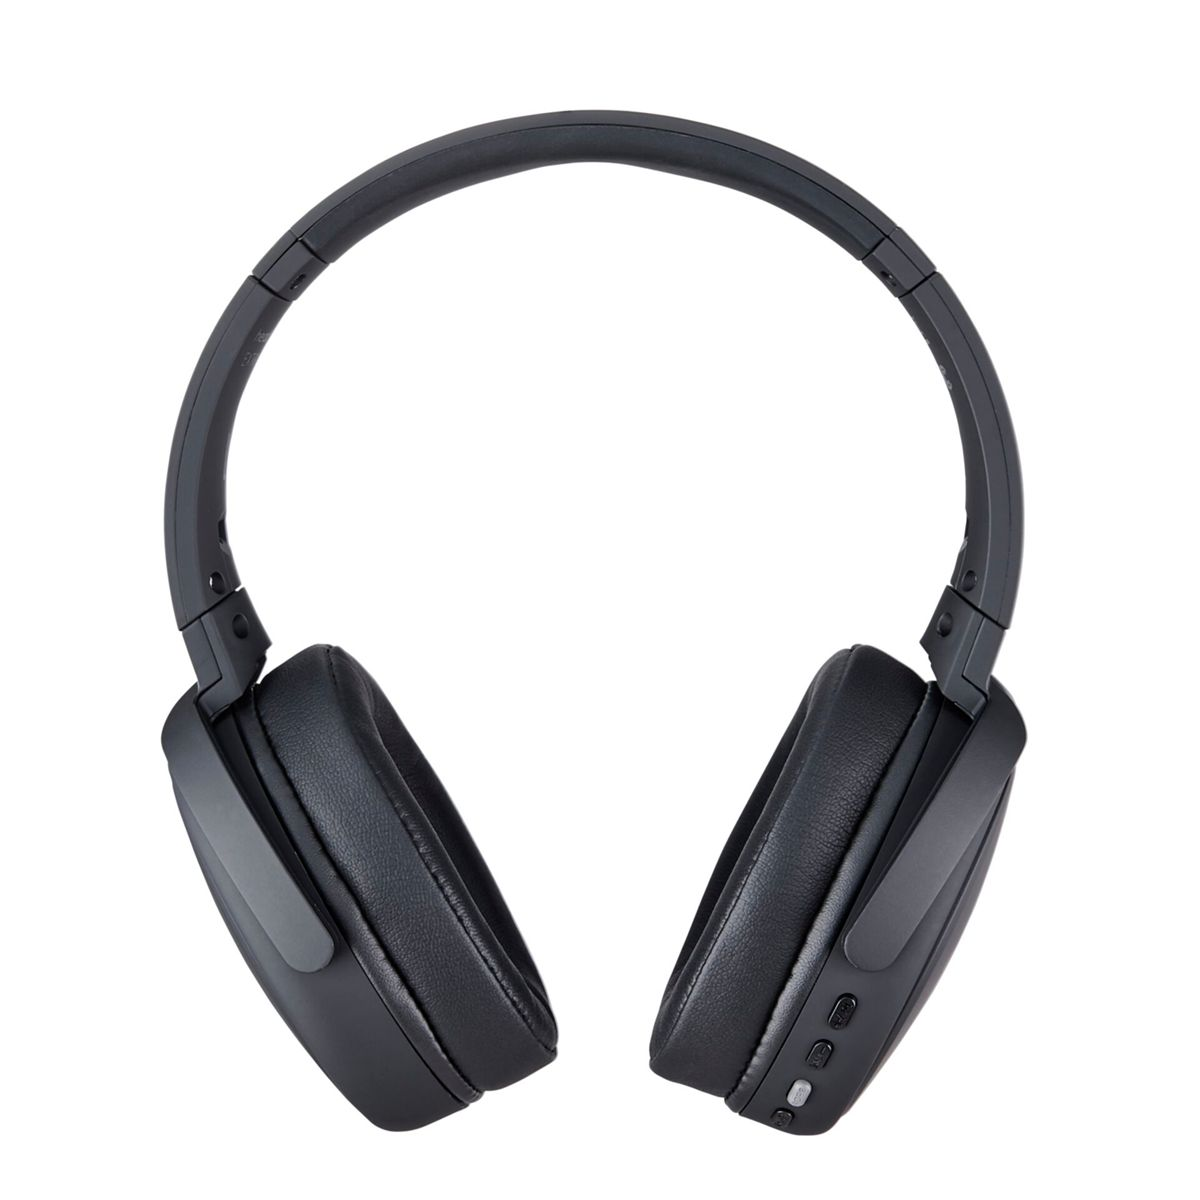 Kopfhörer Pro Bluetooth schwarz Black, On-ear Headpods BOOMPODS